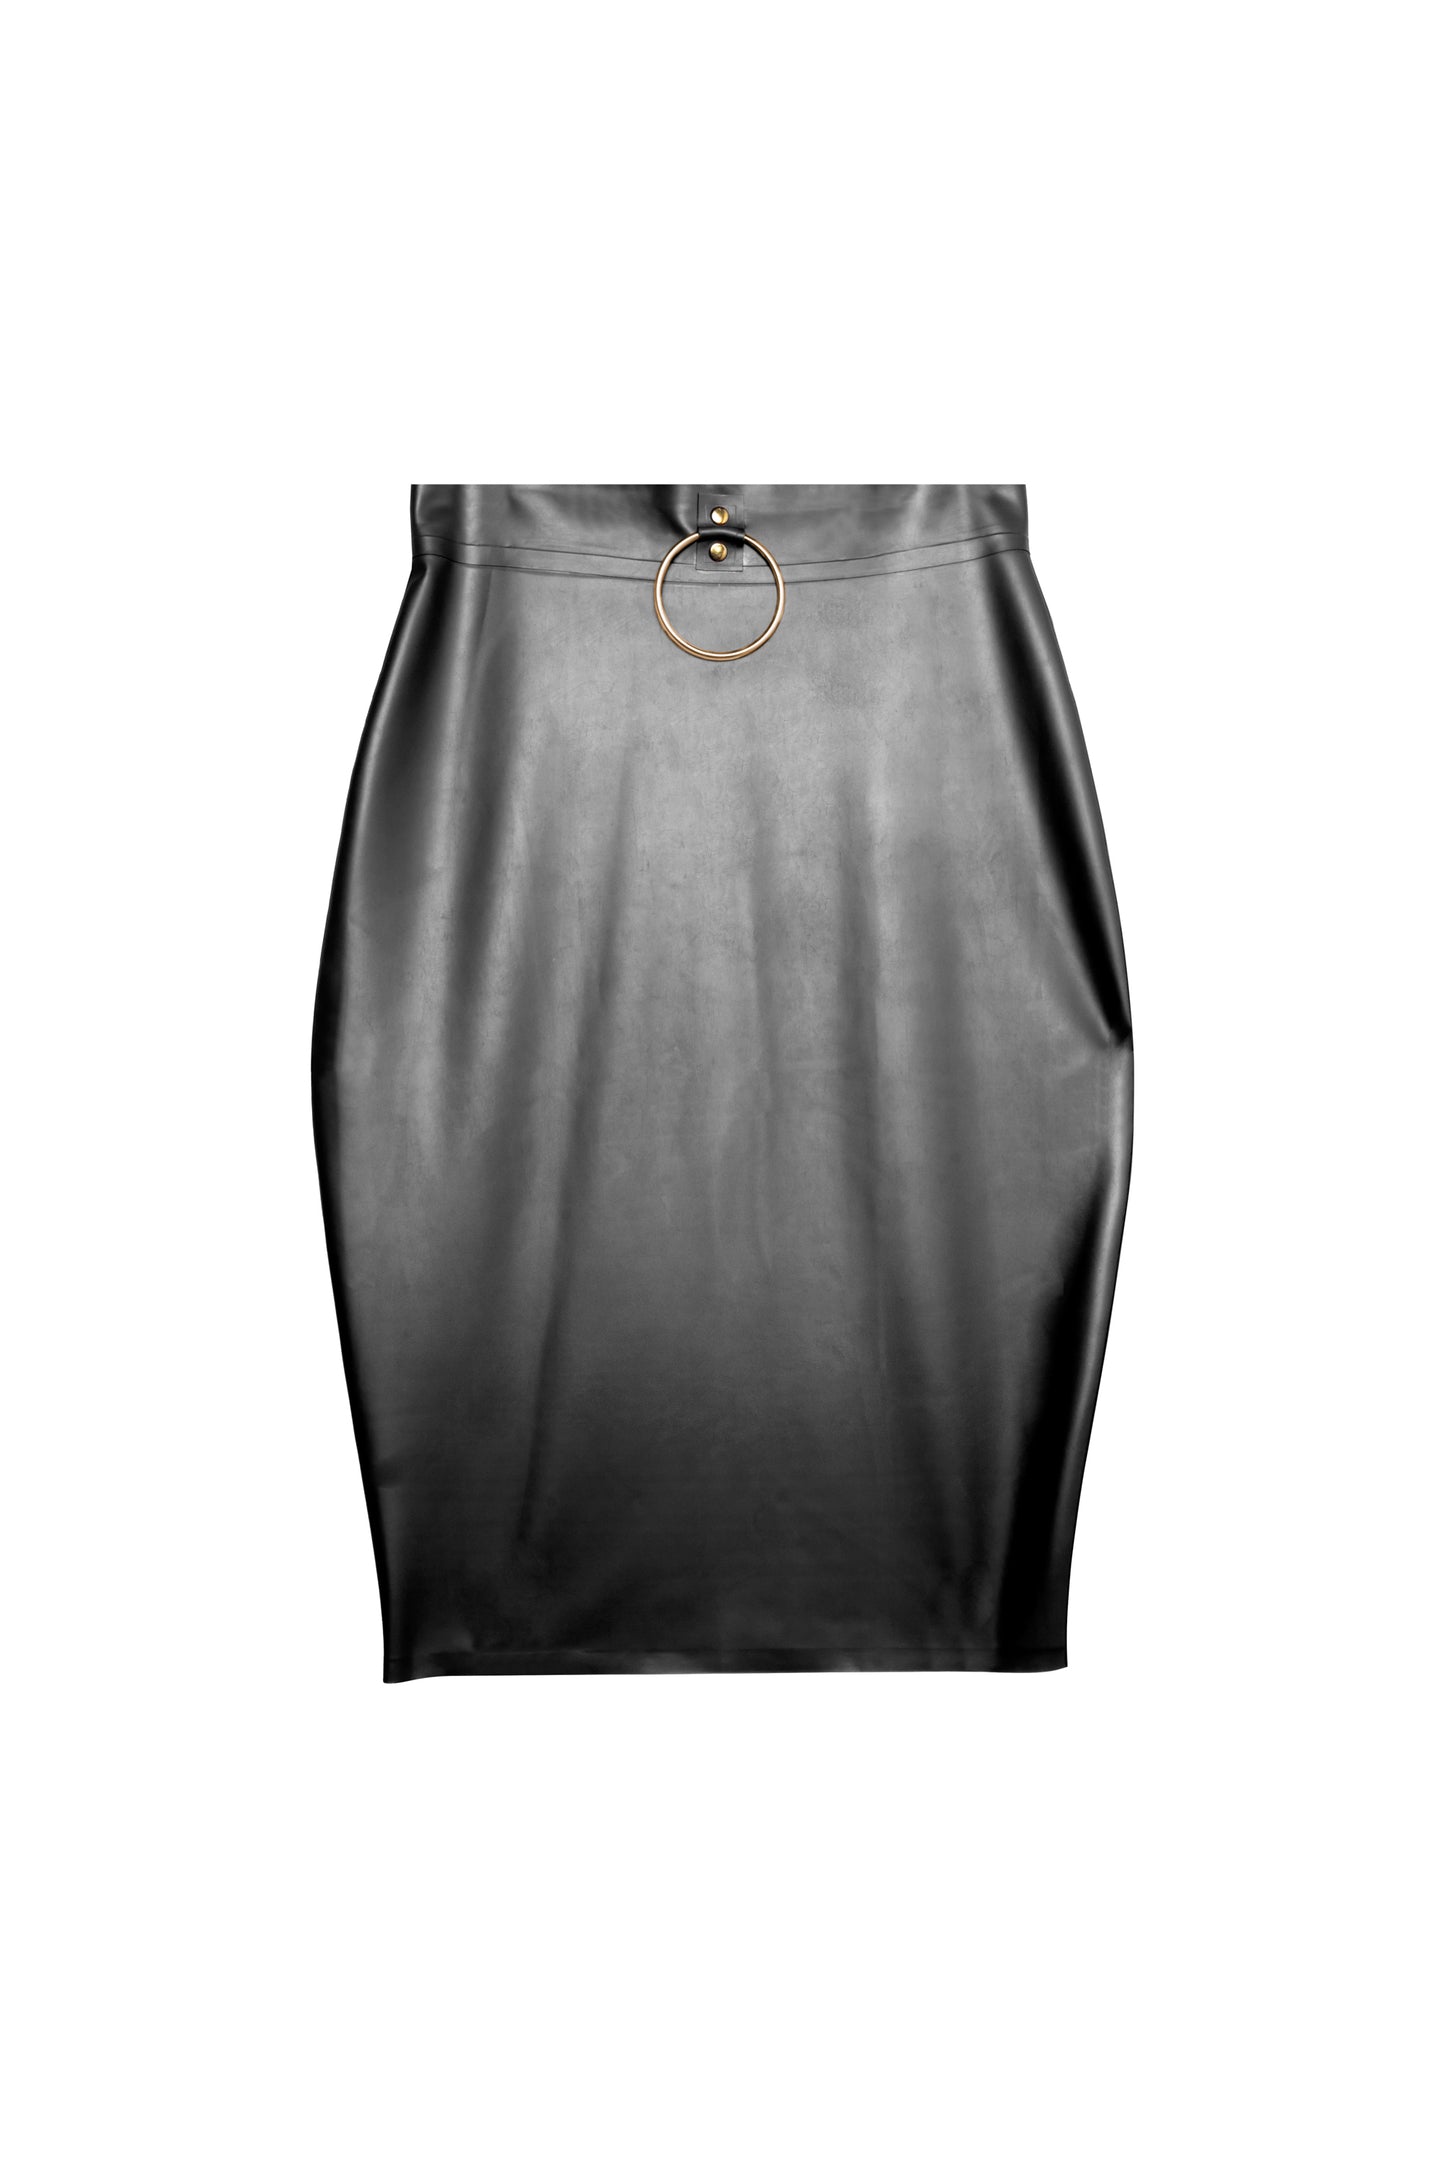 Imogen Latex and Ring Pencil Skirt - Black